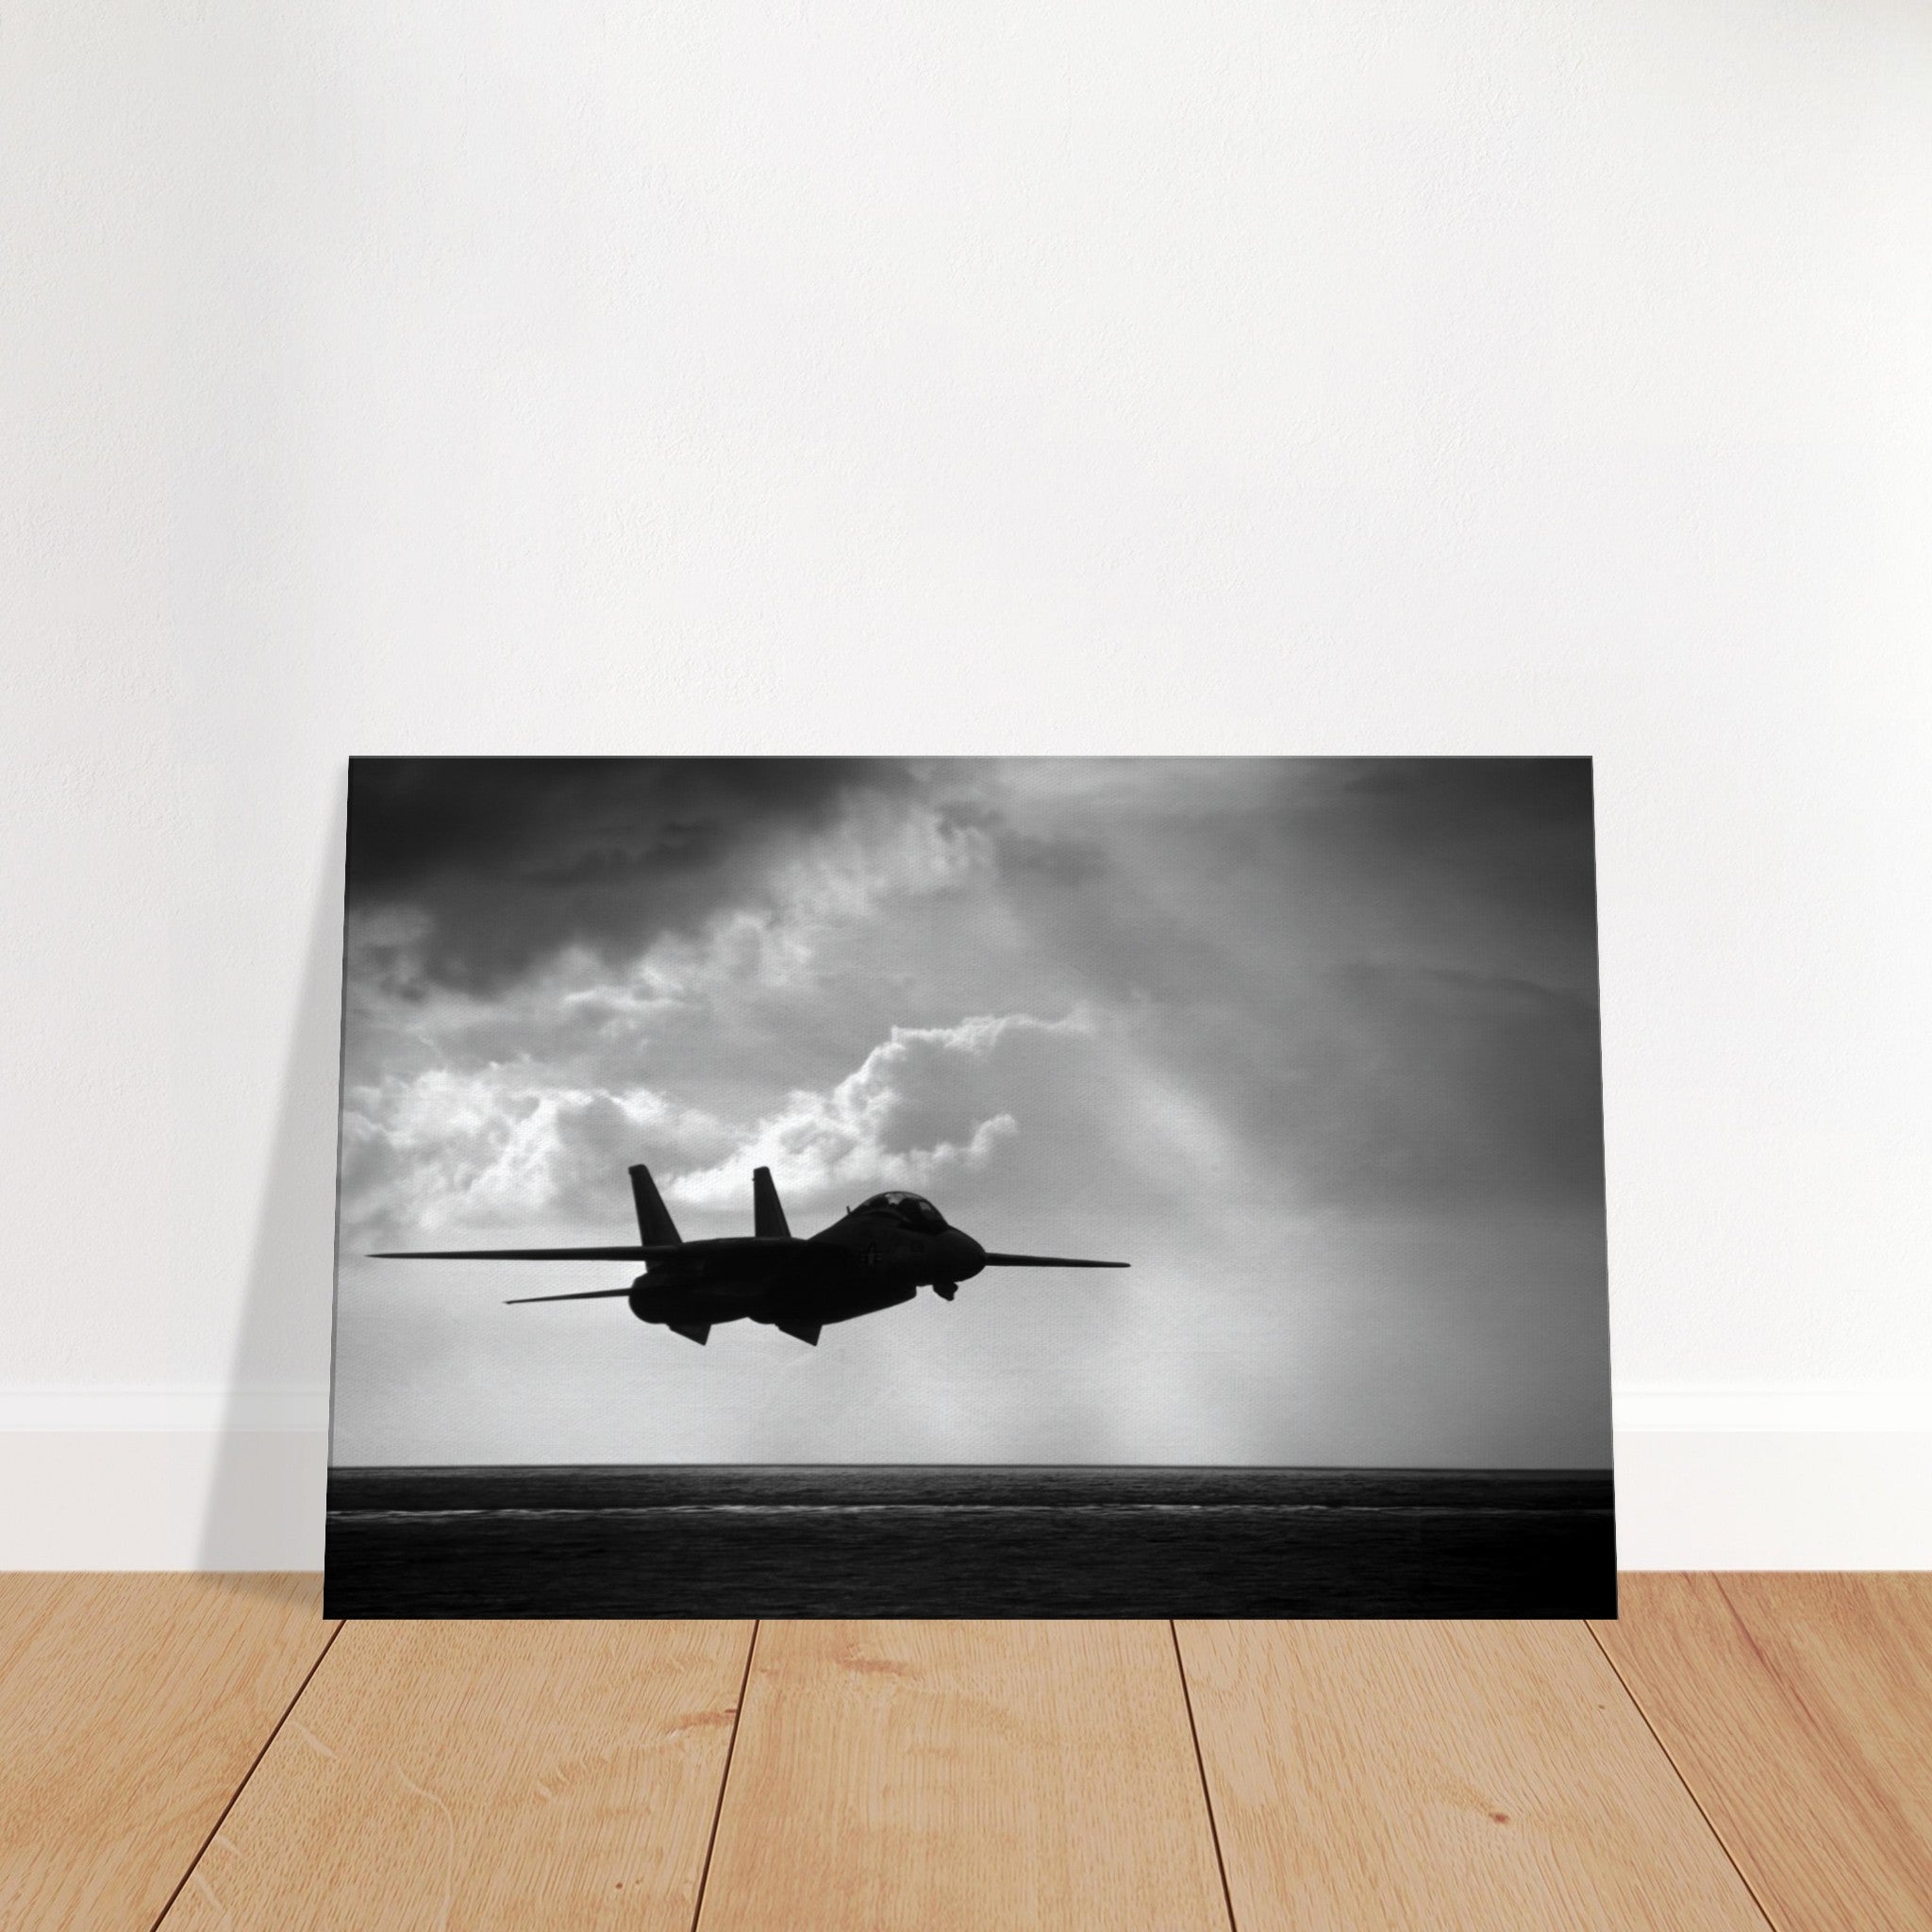 F-14 "Tomcat" on Canvas - I Love a Hangar